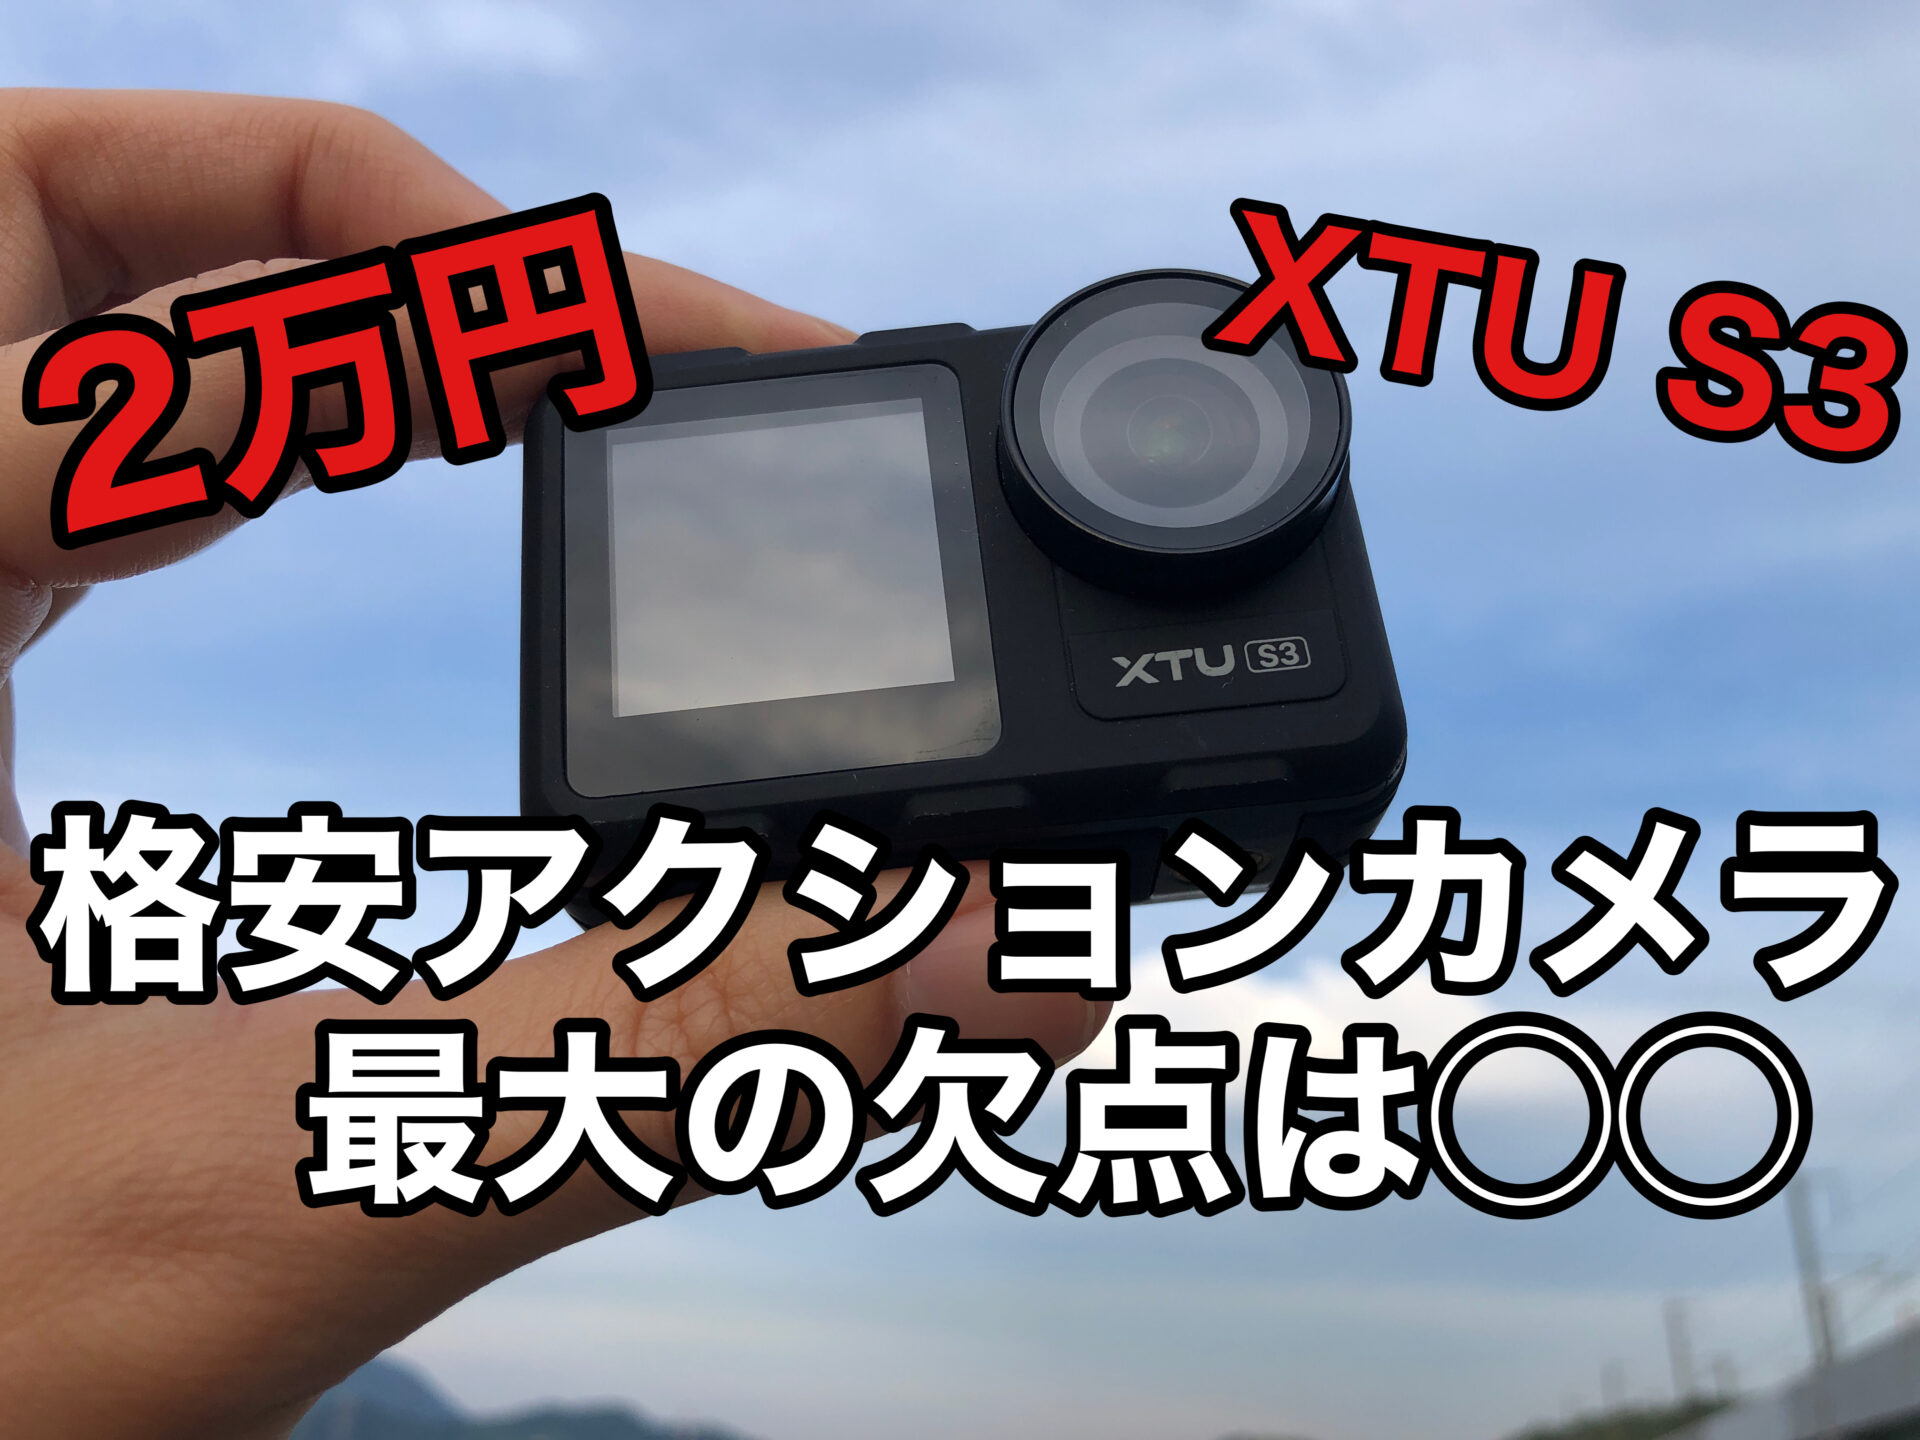 XTU S3】2万円のアクションカメラ 最大の弱点はこれだ！検証動画付きで 